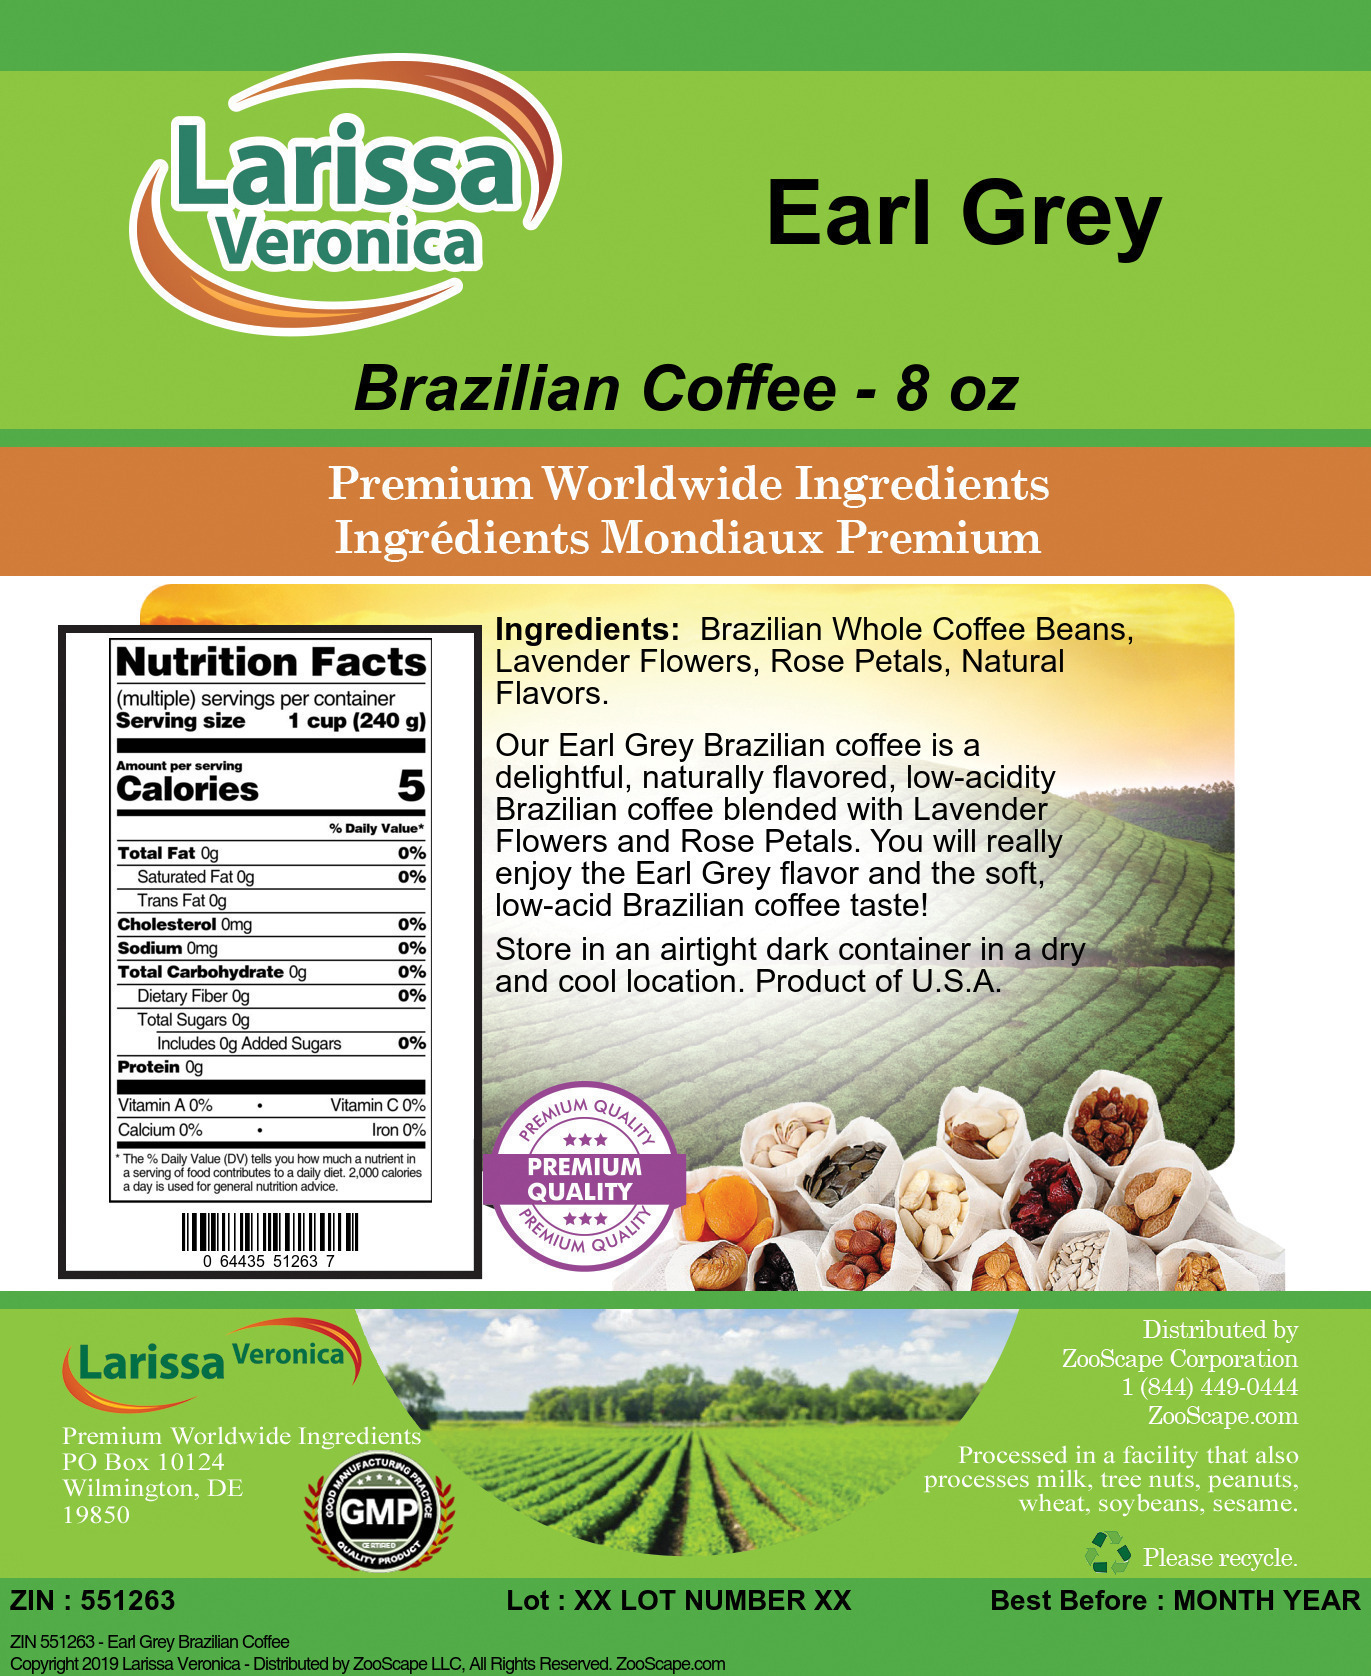 Earl Grey Brazilian Coffee - Label